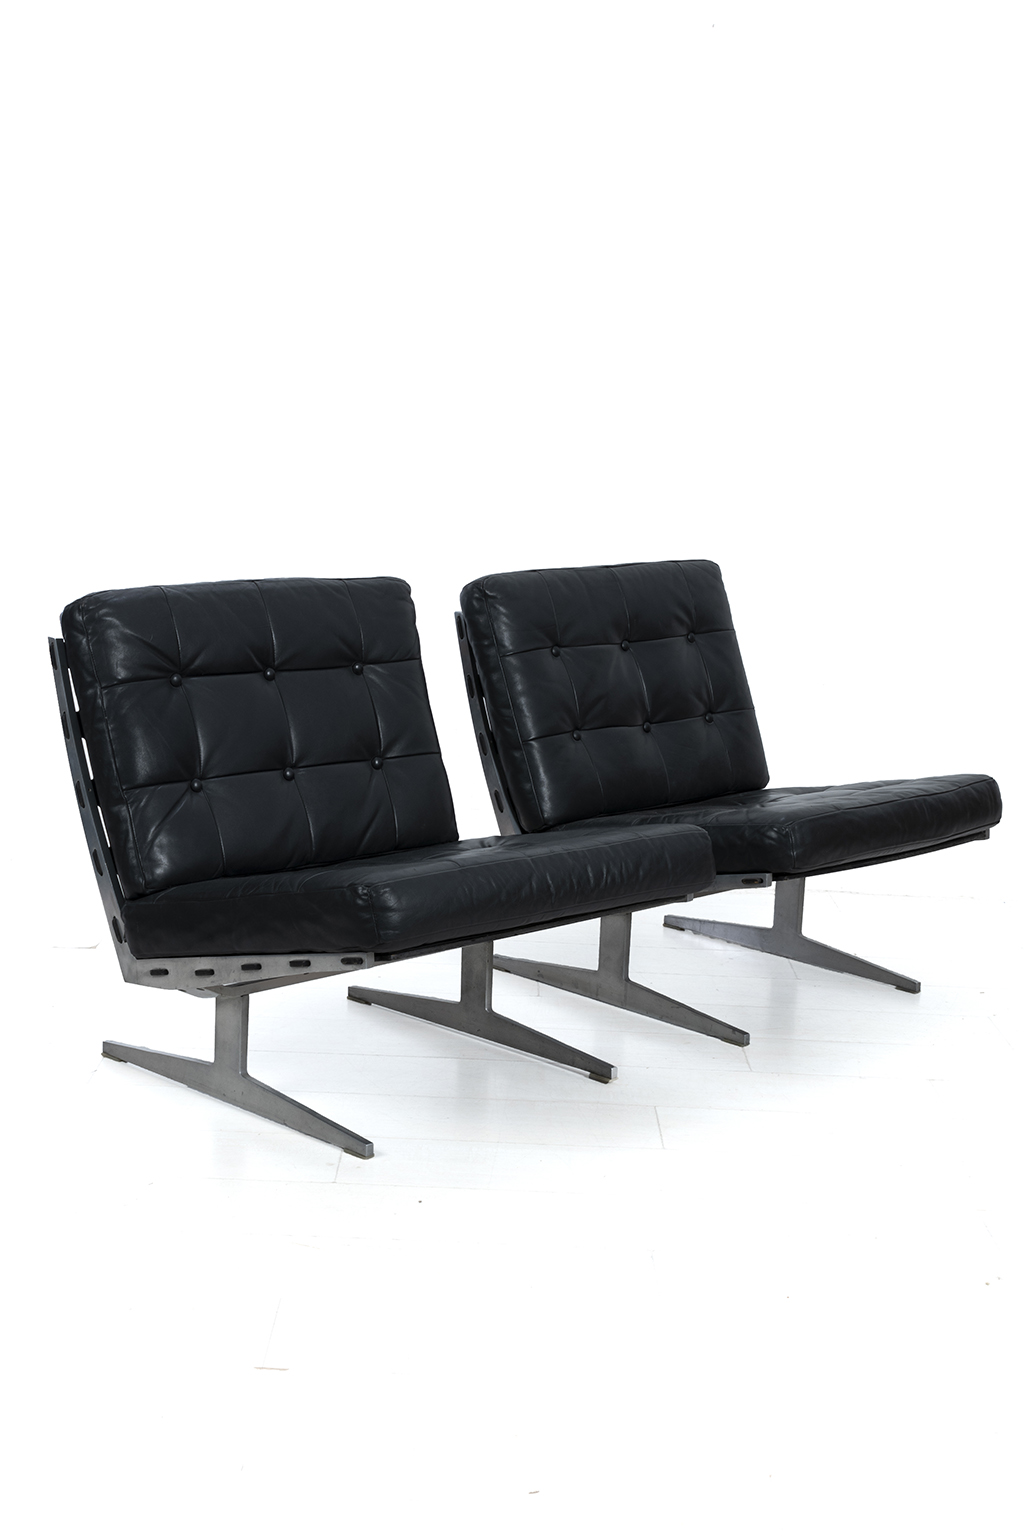 Set Paul Leidersdorff ‘Caravelle’ lounge chairs